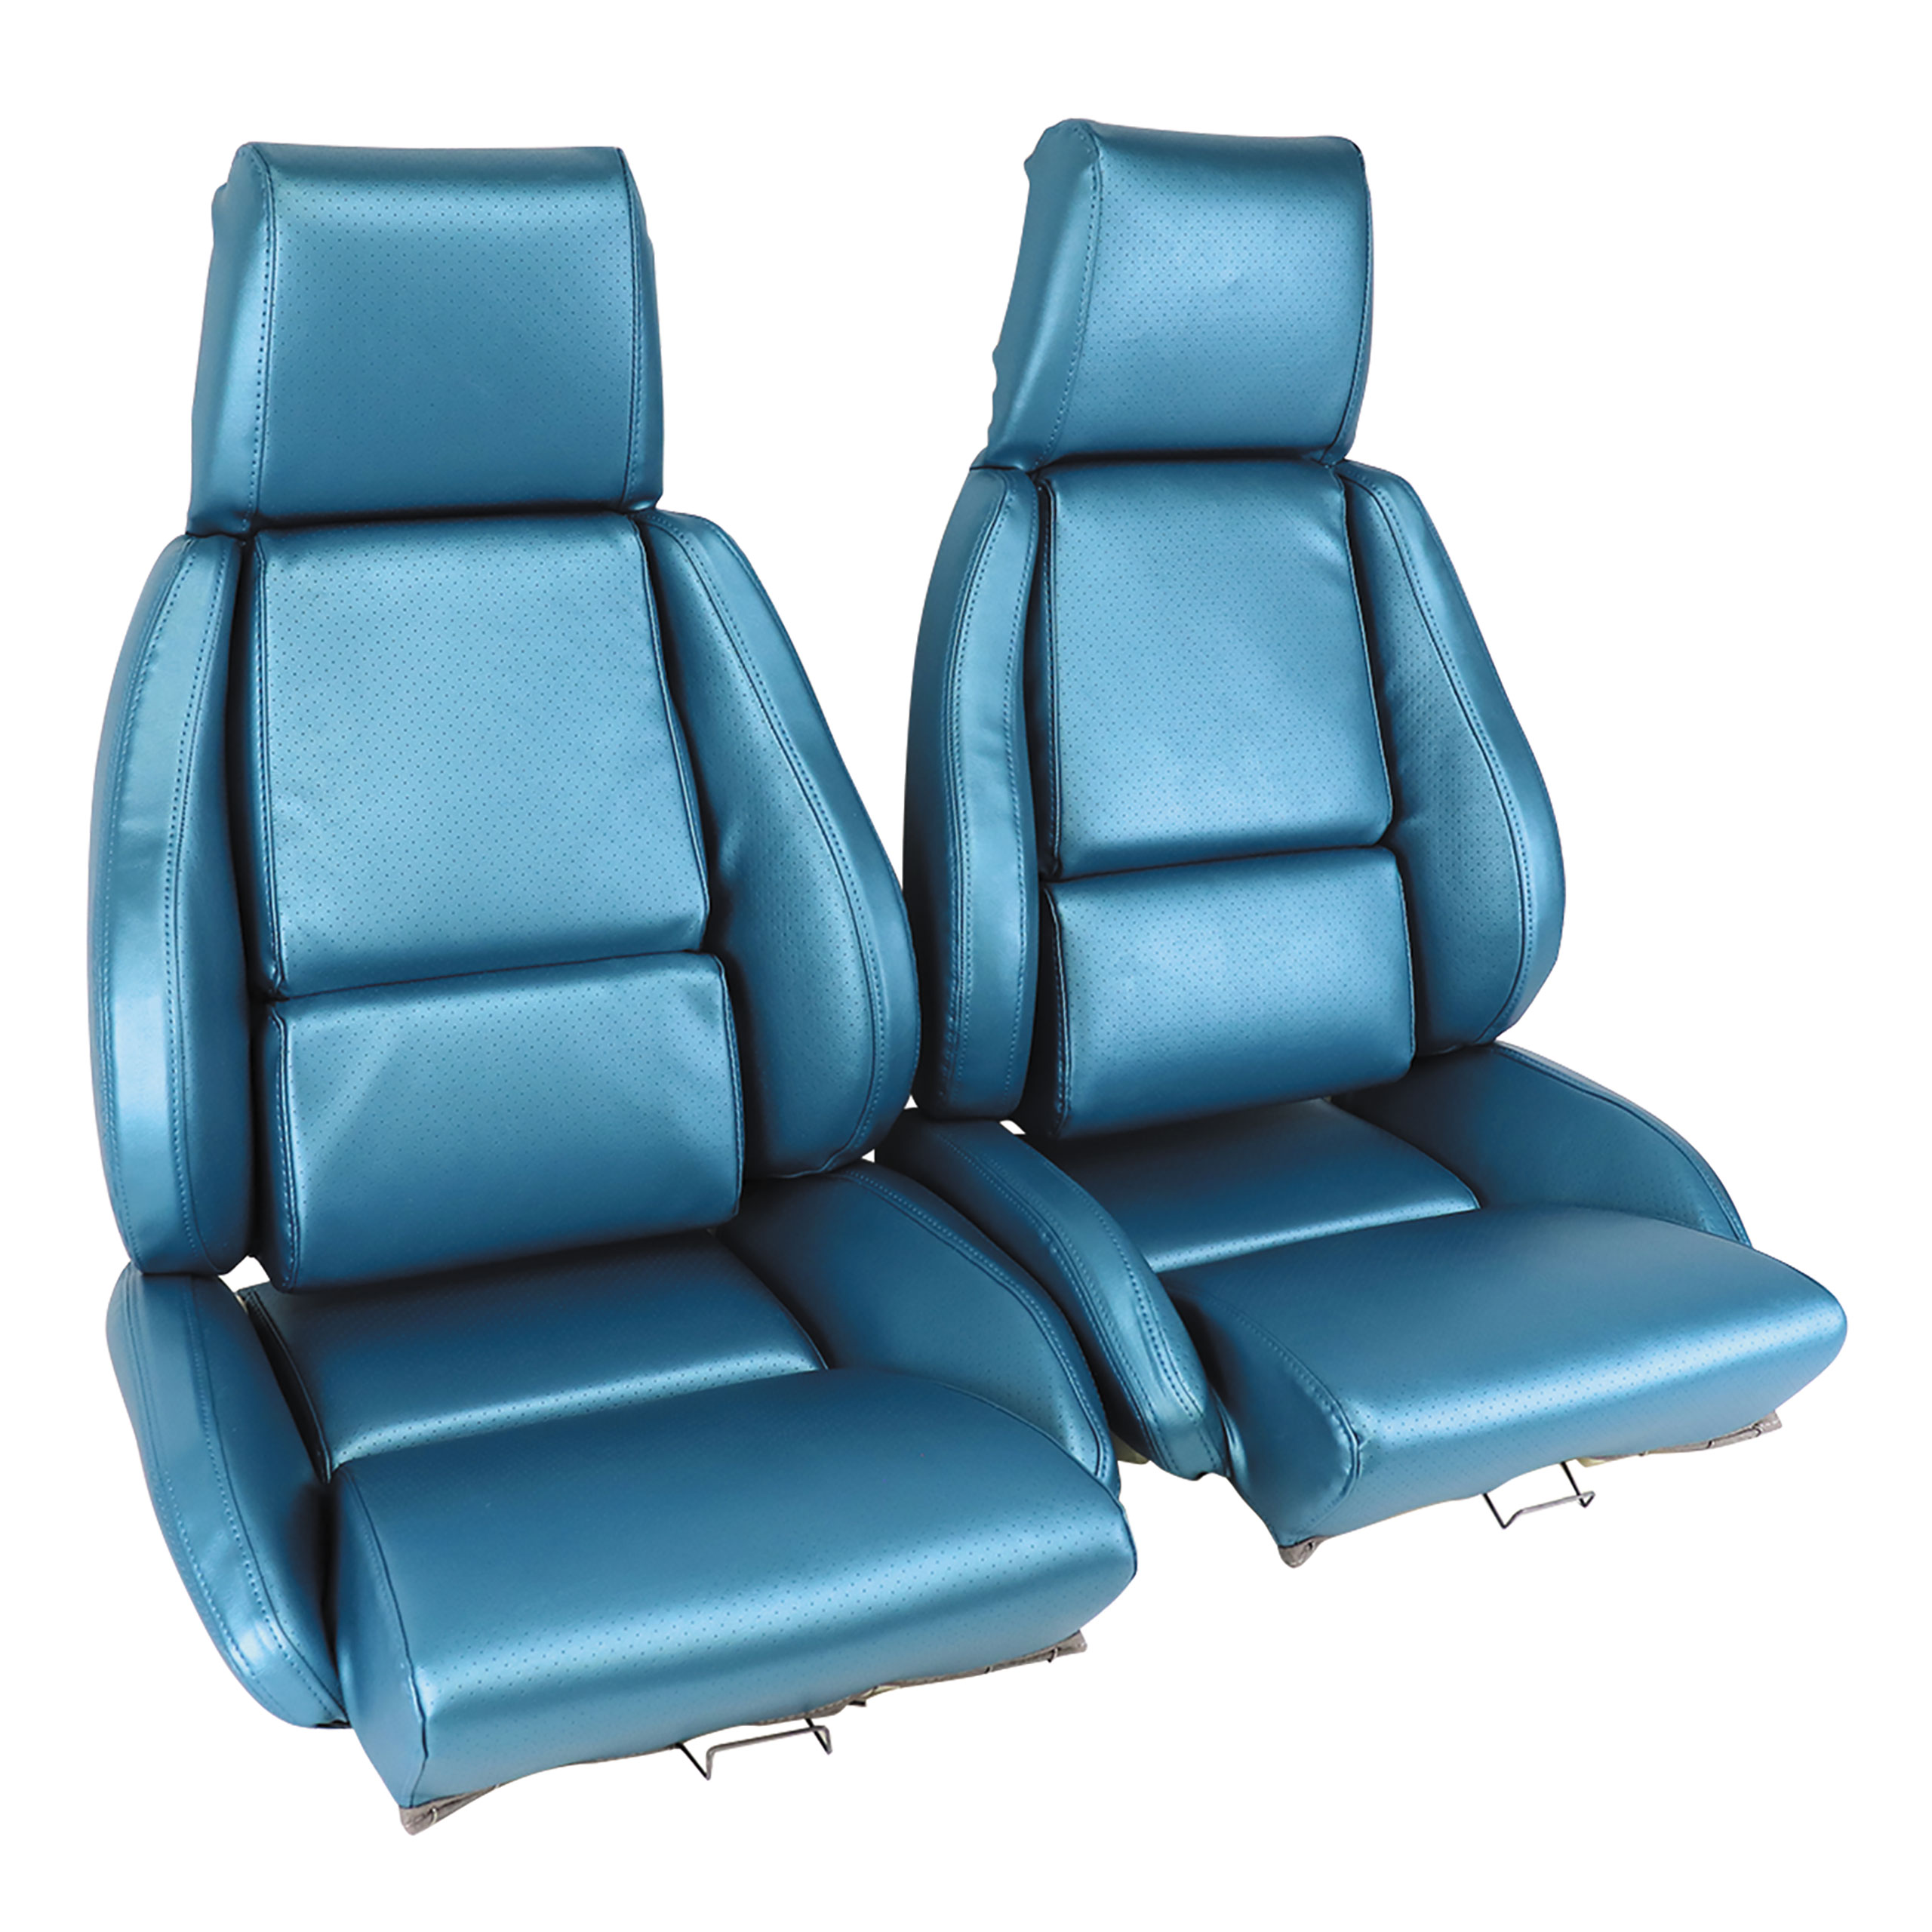 1986-88 Corvette C4 Mounted Leather-Like Vinyl Seat Covers Blue Standard CA-422974 